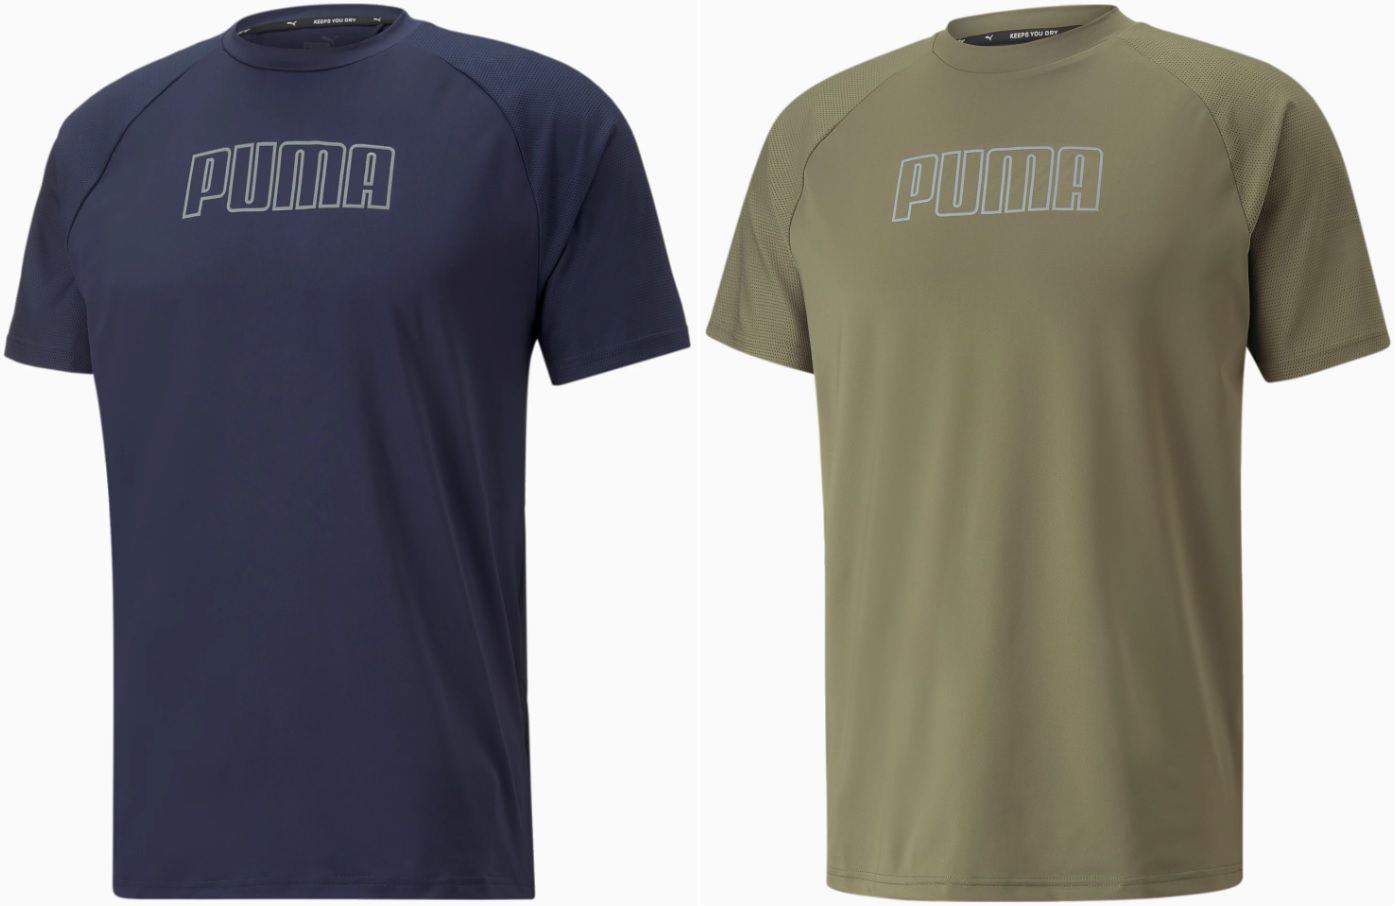 Puma Active Trainings Shirt in Schwarz, Blau o. Olive für 9,96€ (statt 25€)